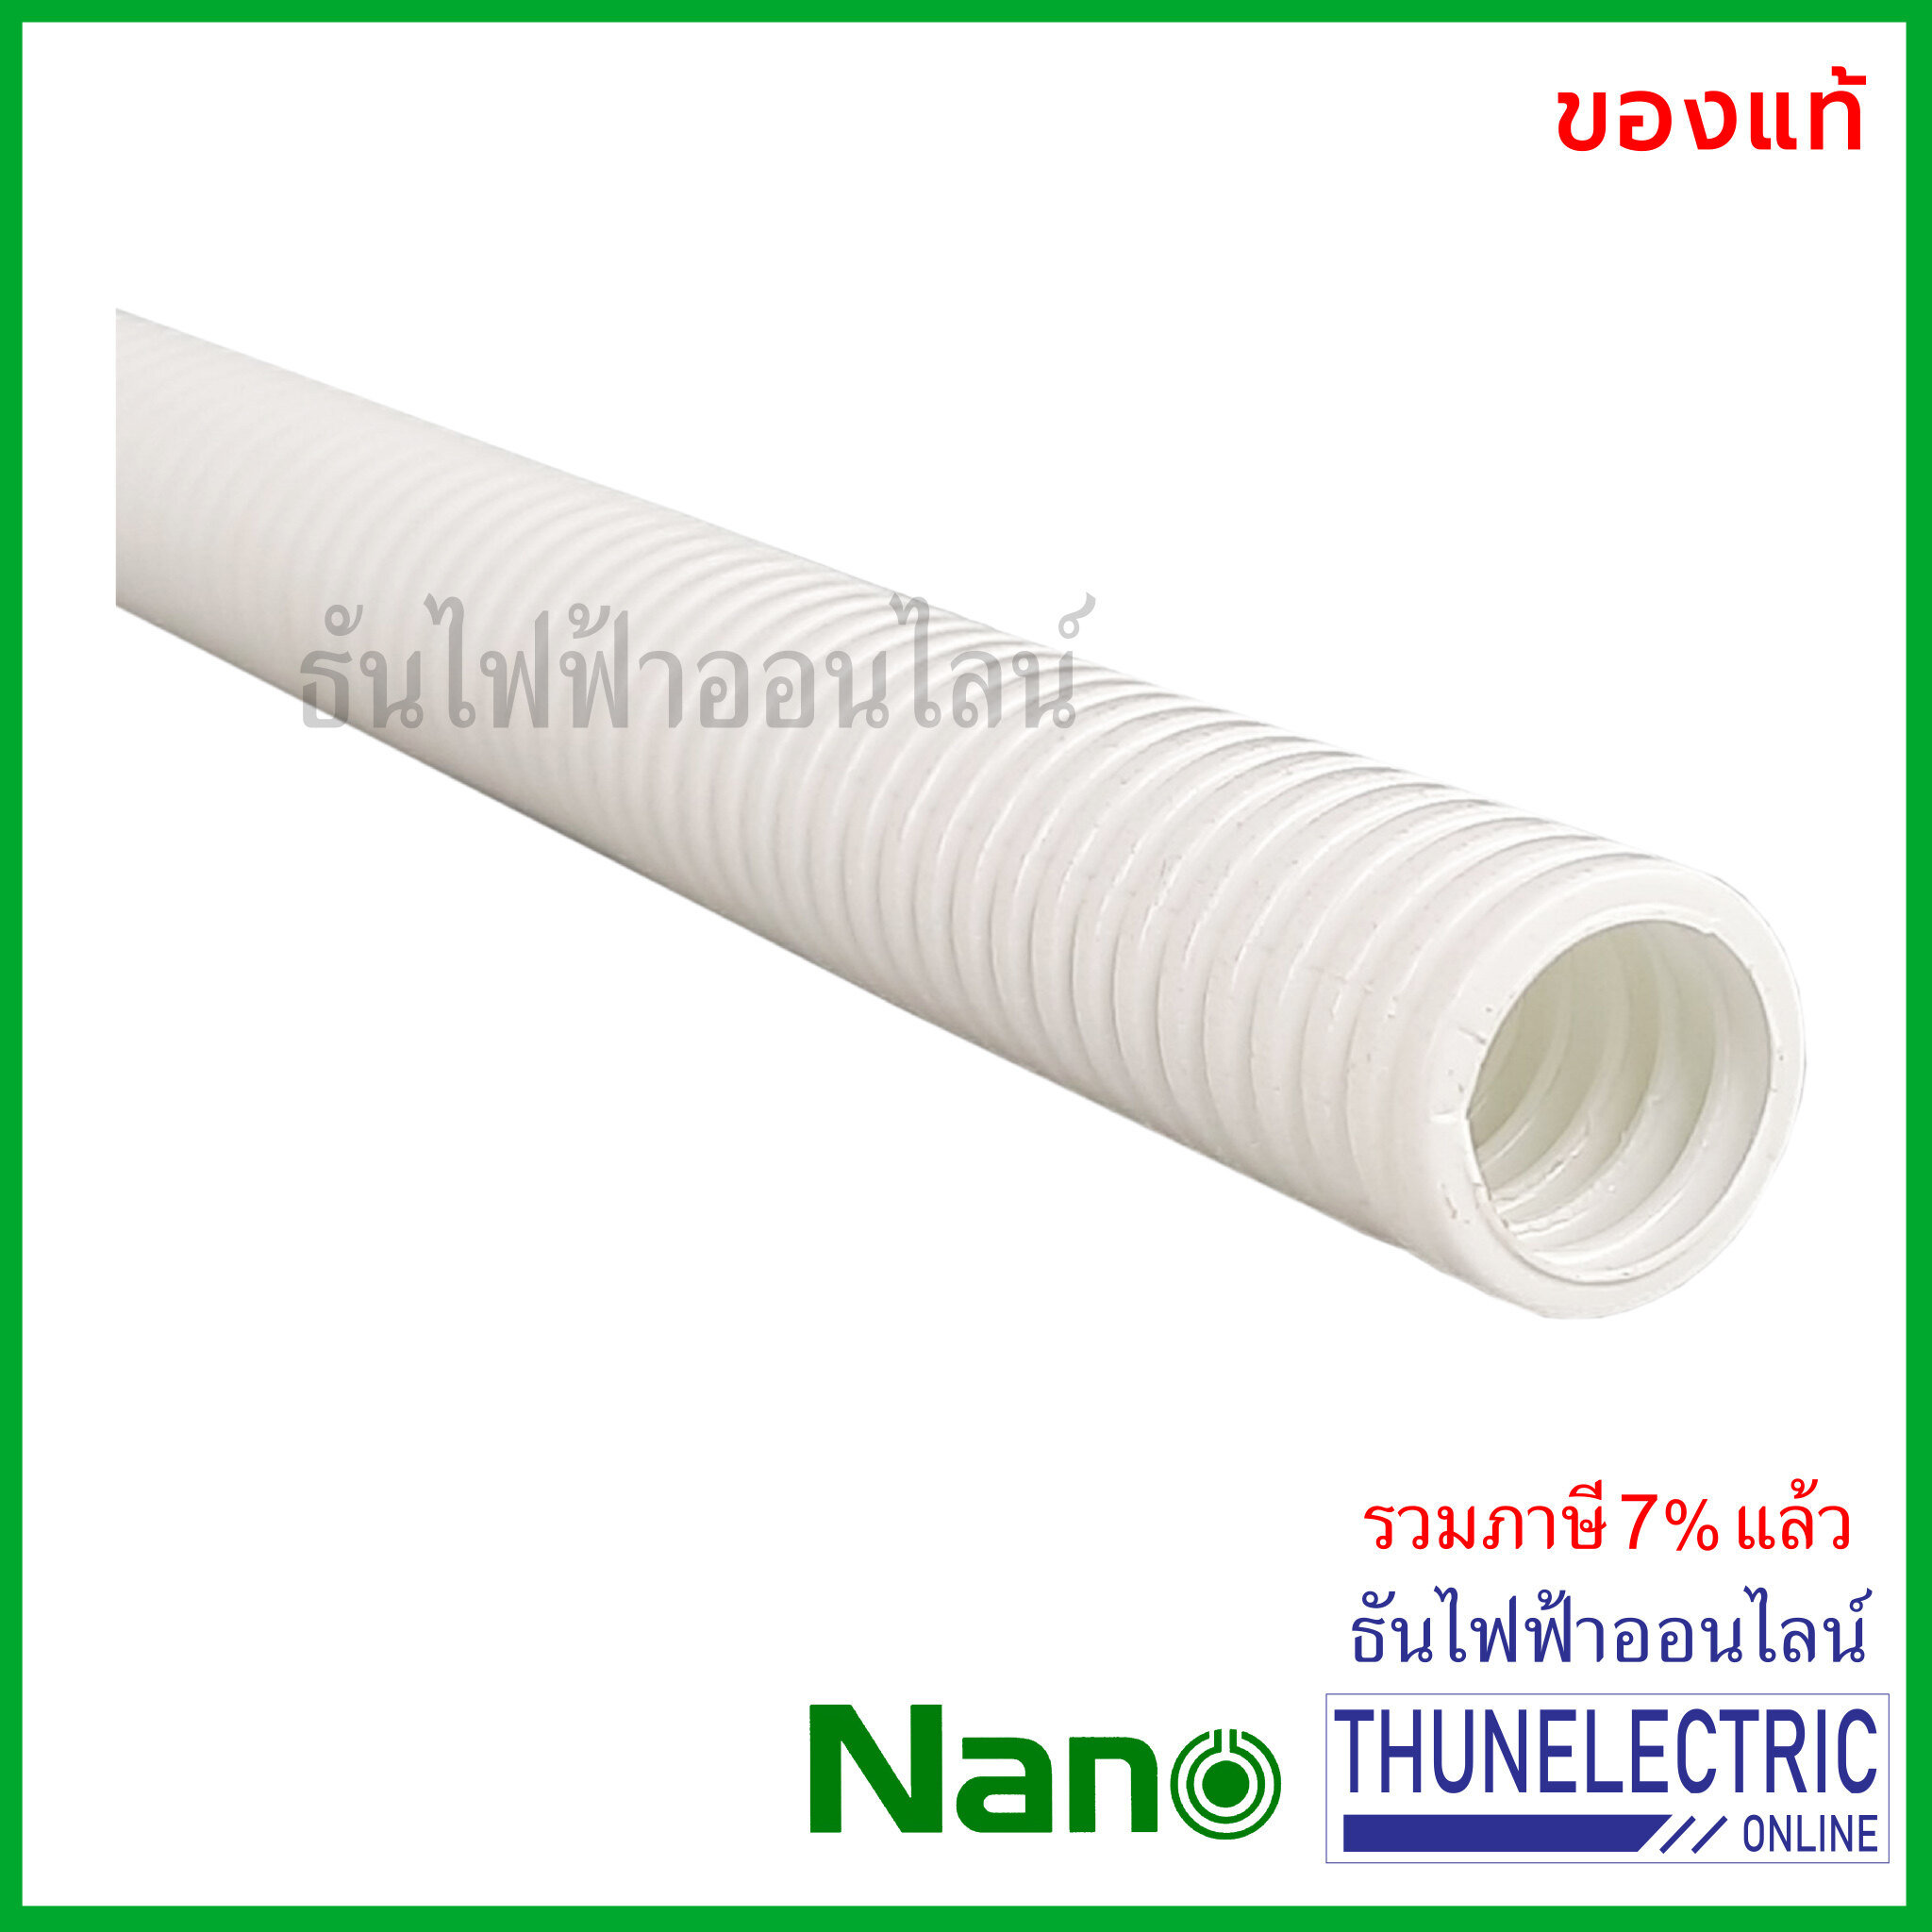 NANO ท่อลูกฟูก สีขาว ขนาด 32 mm ม้วน 25 m (NNCC32) ท่อย่น ท่ออ่อน ท่อเฟล็ก ท่อ flex pvc นาโน ธันไฟฟ้า